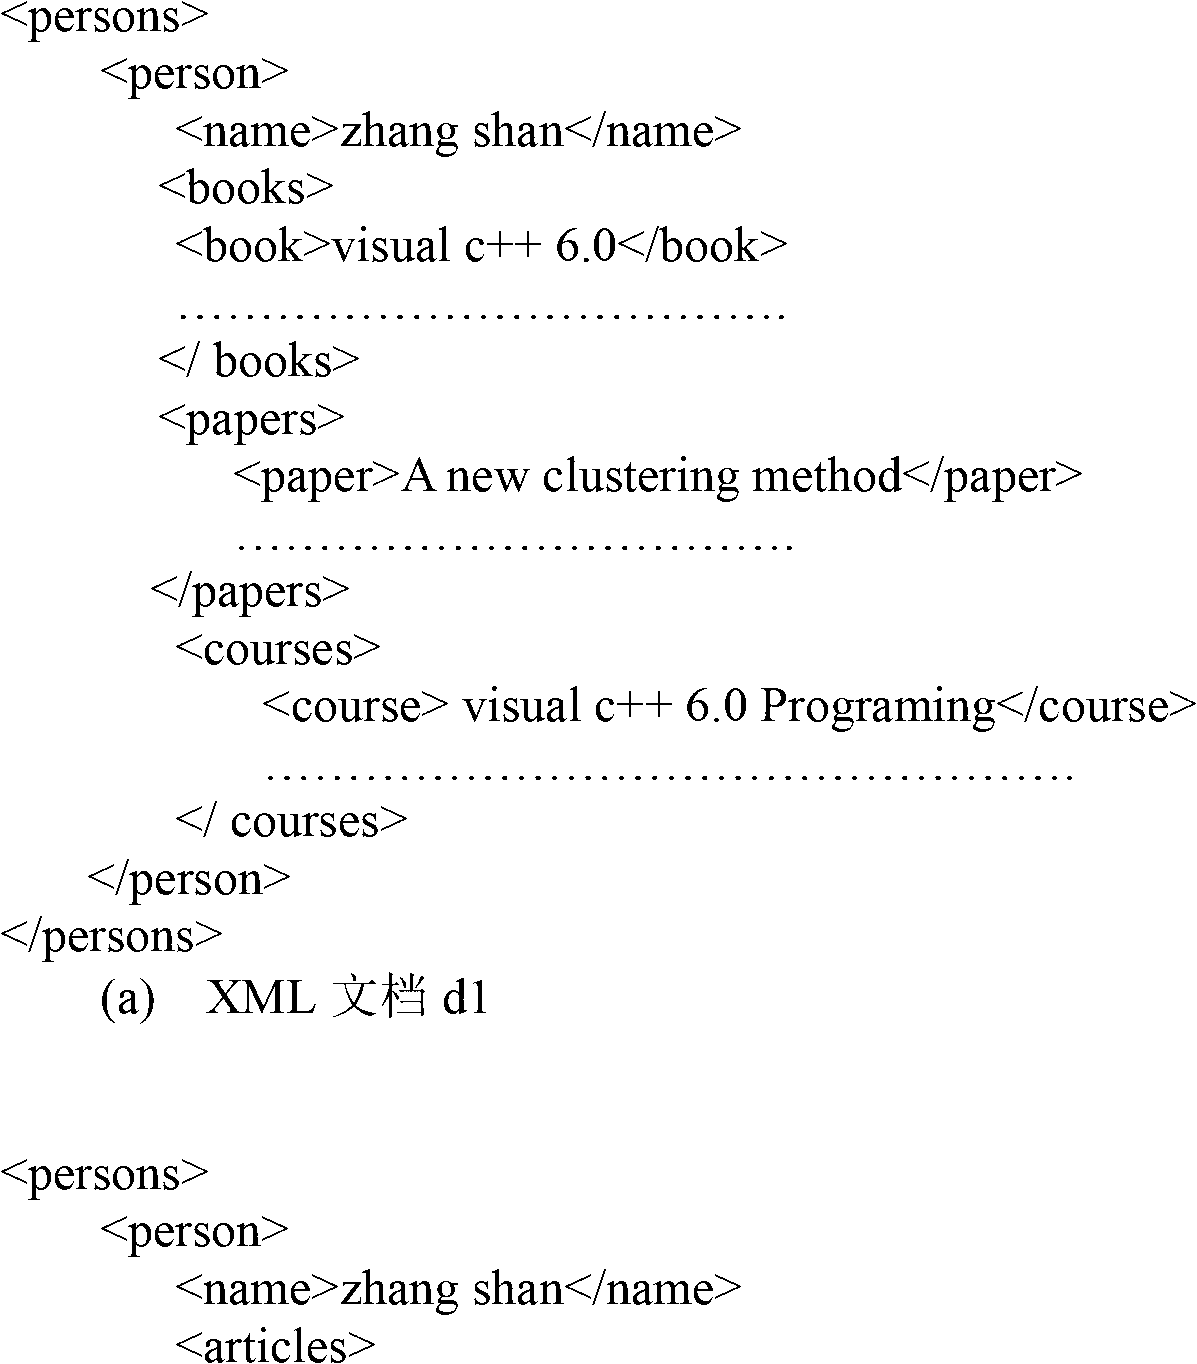 XML (extensible markup language) document spectrum clustering method based on affinity propagation